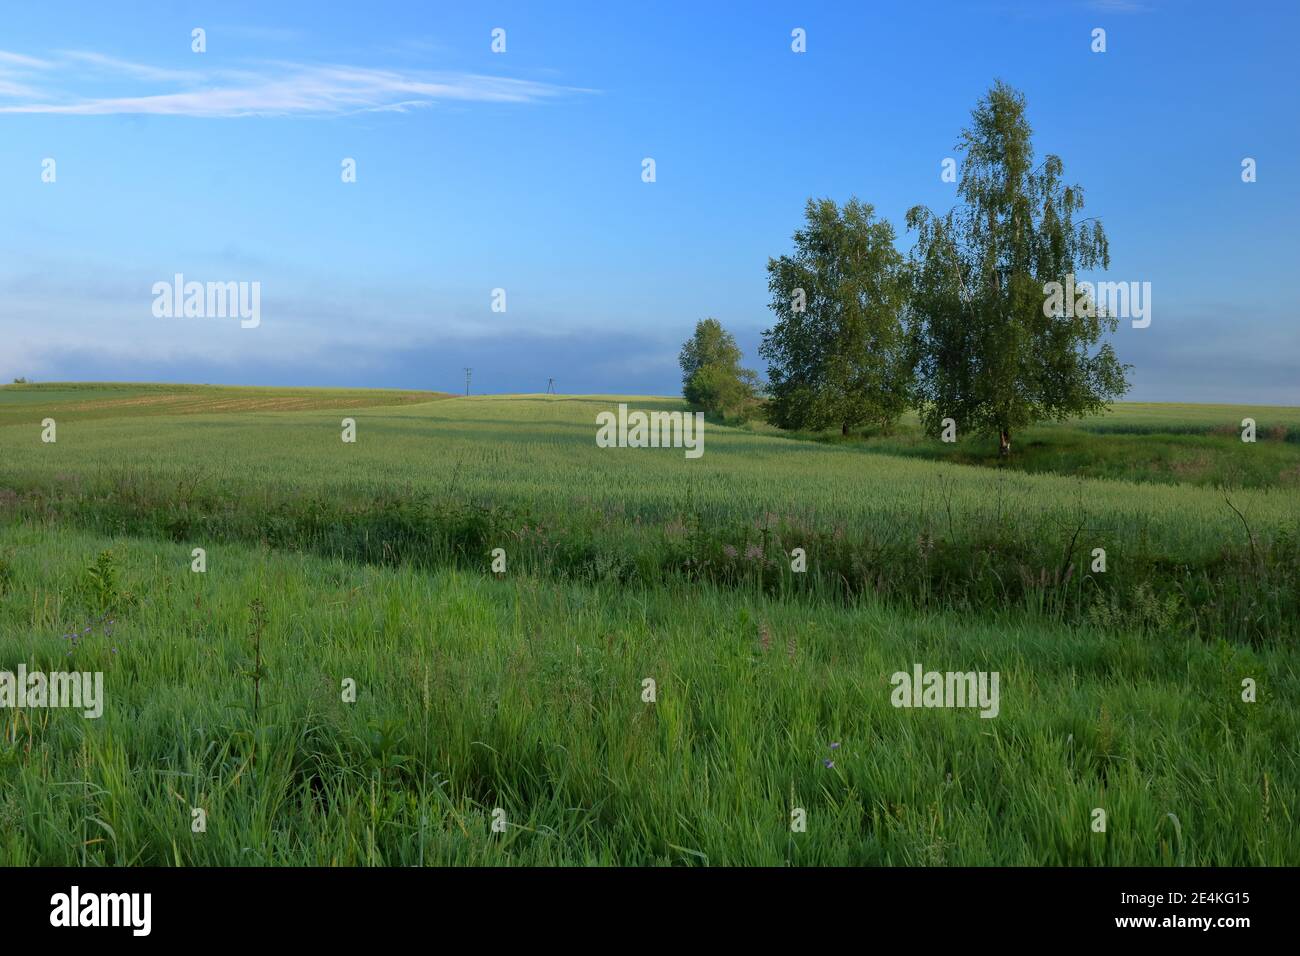 Schöne polnische Landschaft, grünes Wiesenfeld, Bäume, Horizont, blauer Himmel, Frühjahrssaison. Stockfoto